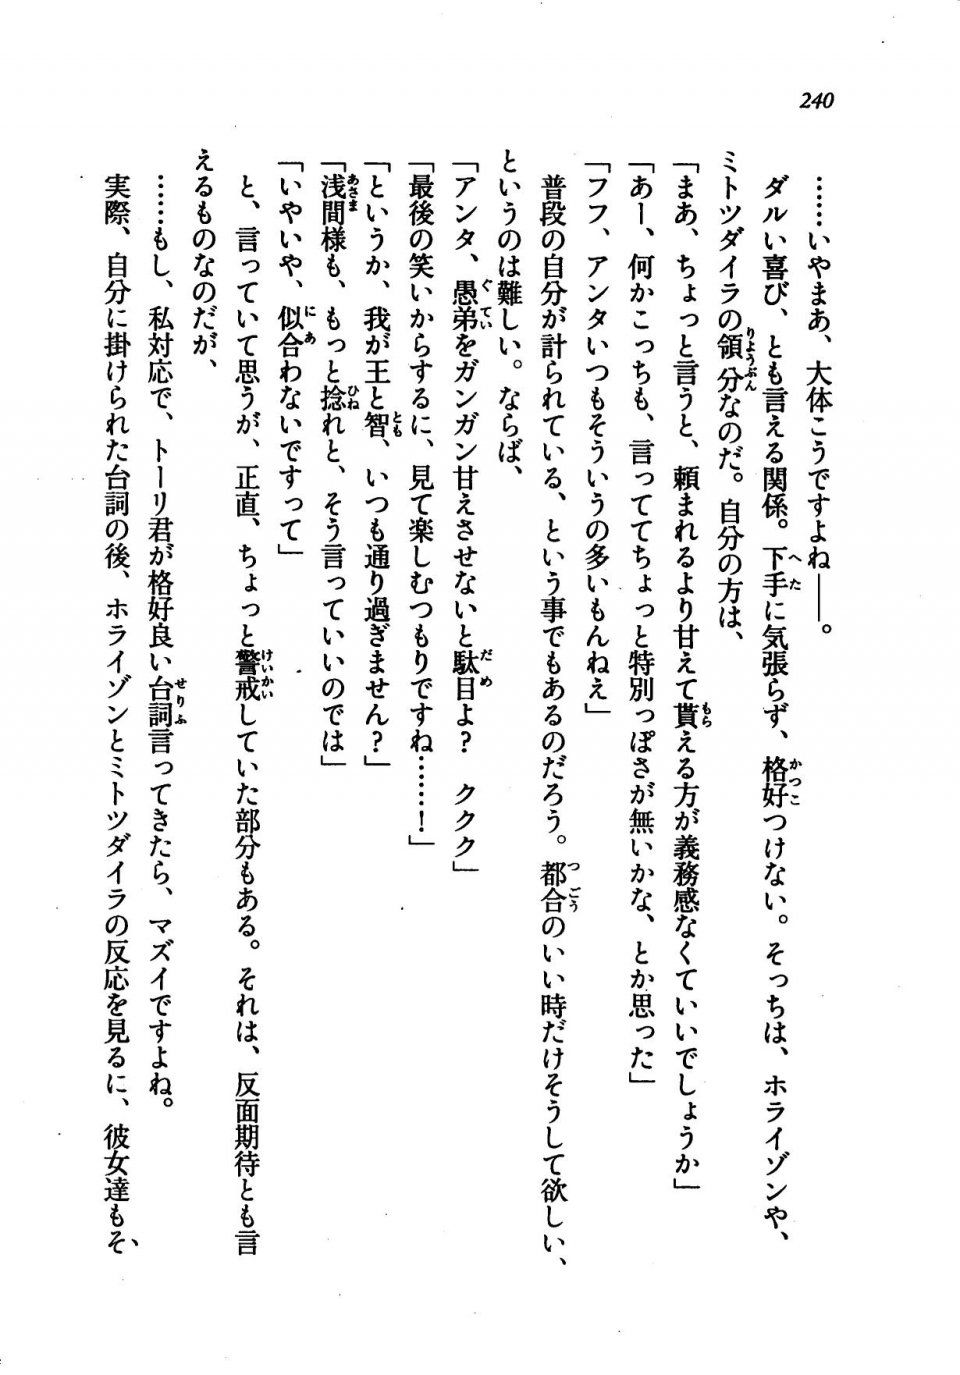 Kyoukai Senjou no Horizon LN Vol 21(8C) Part 1 - Photo #239